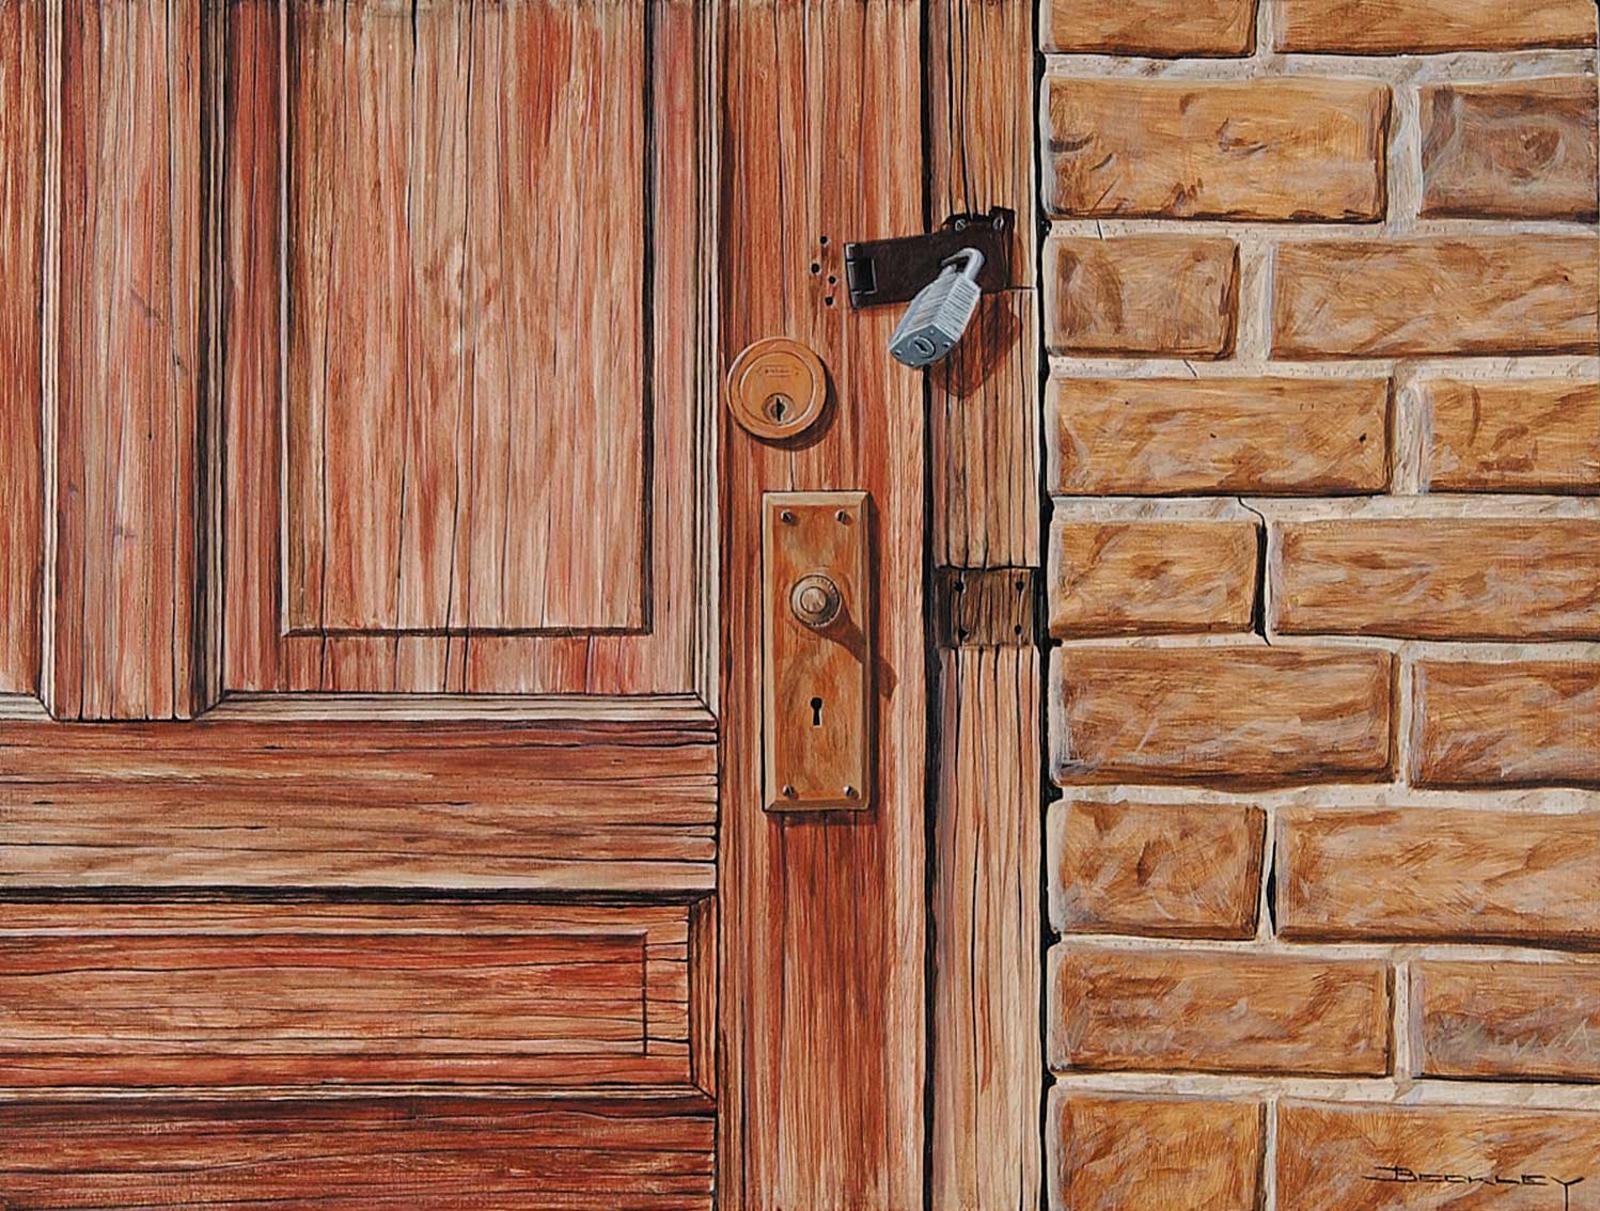 Allan Beckley - Untitled - The Locked Door